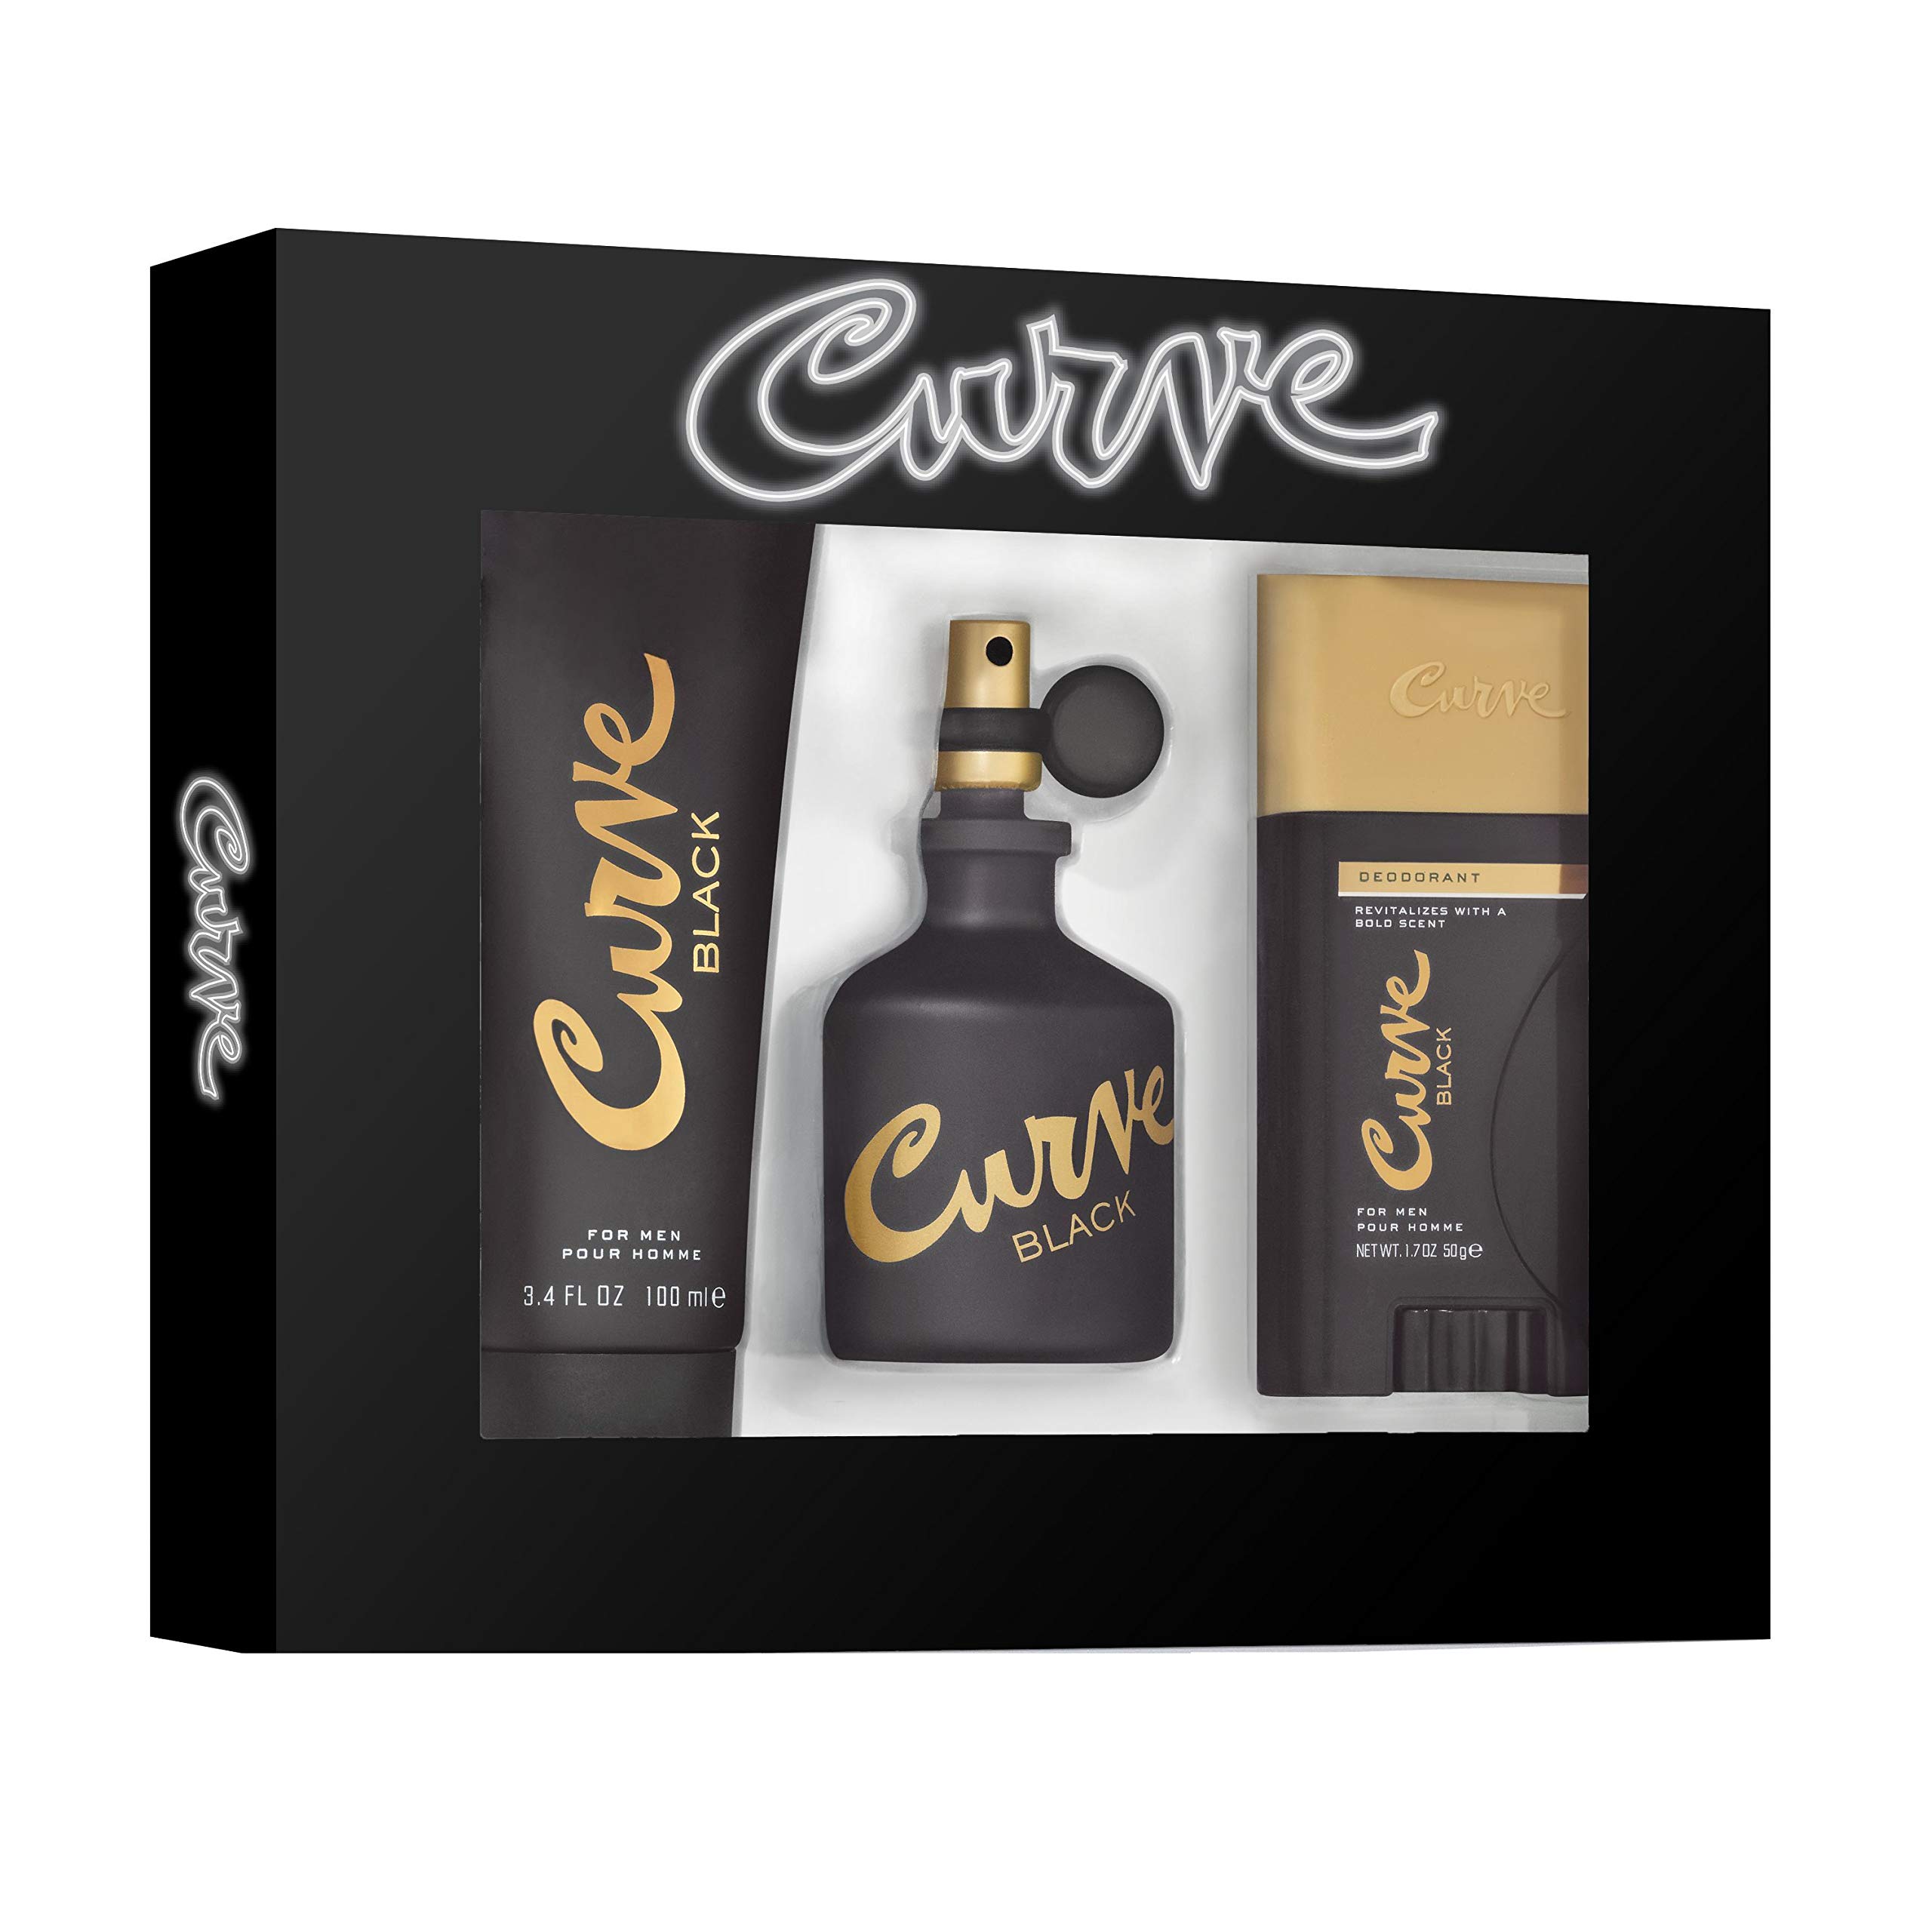 Men's Cologne Gift Set by Curve Black, 4 Pieces Include 2.5oz Cologne, 3.4oz After Shave Balm, 1.7oz Deodorant Stick, Drawstring Bag